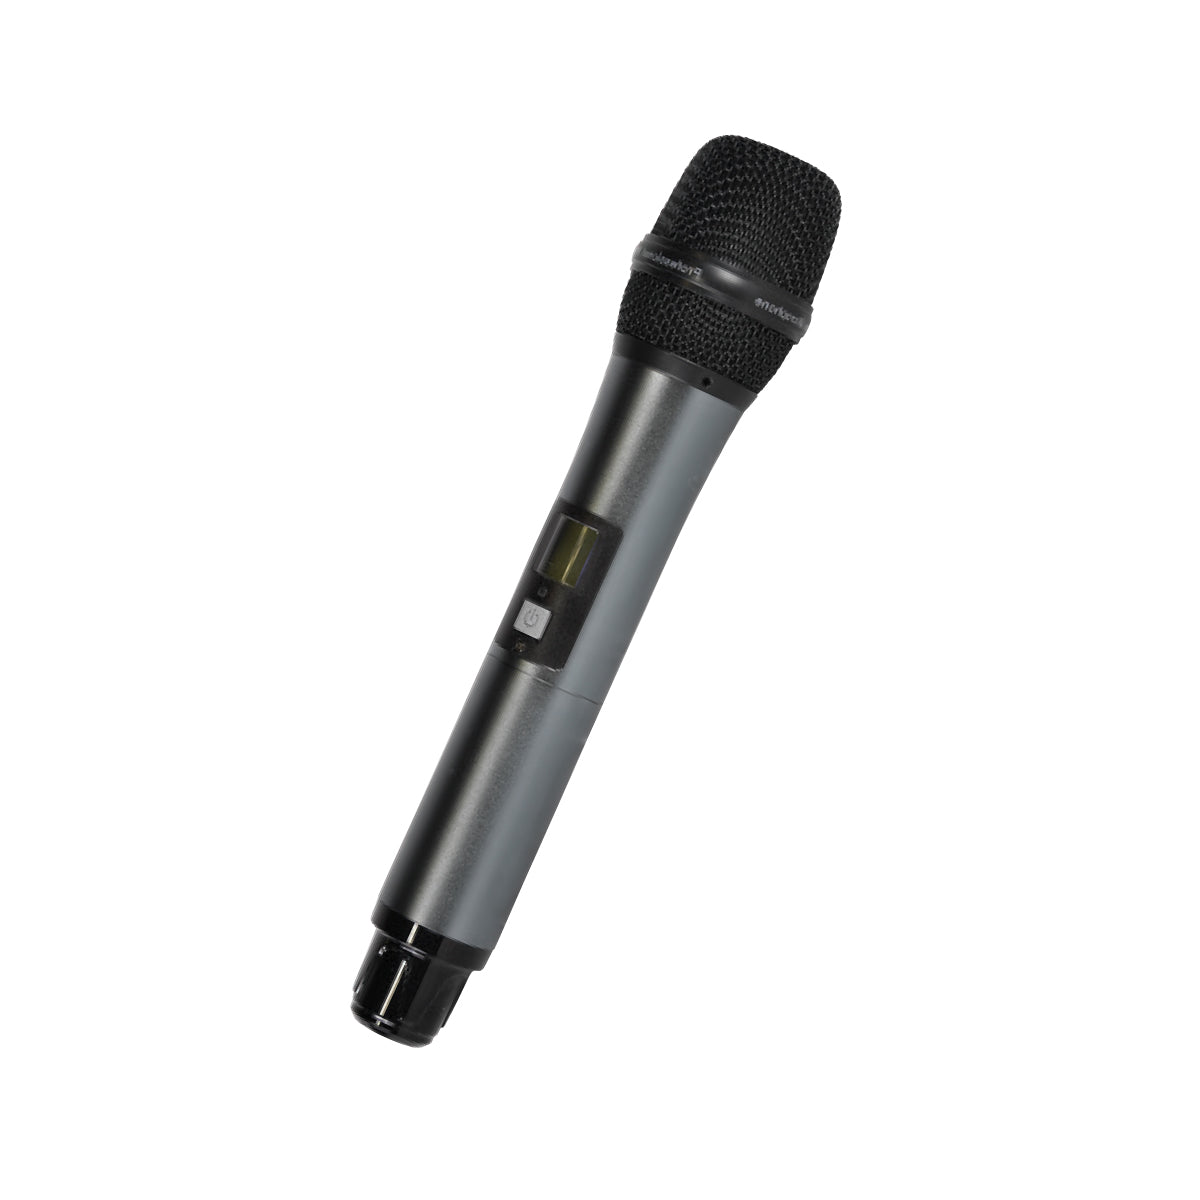 McCormick’s Wireless Handheld Microphone